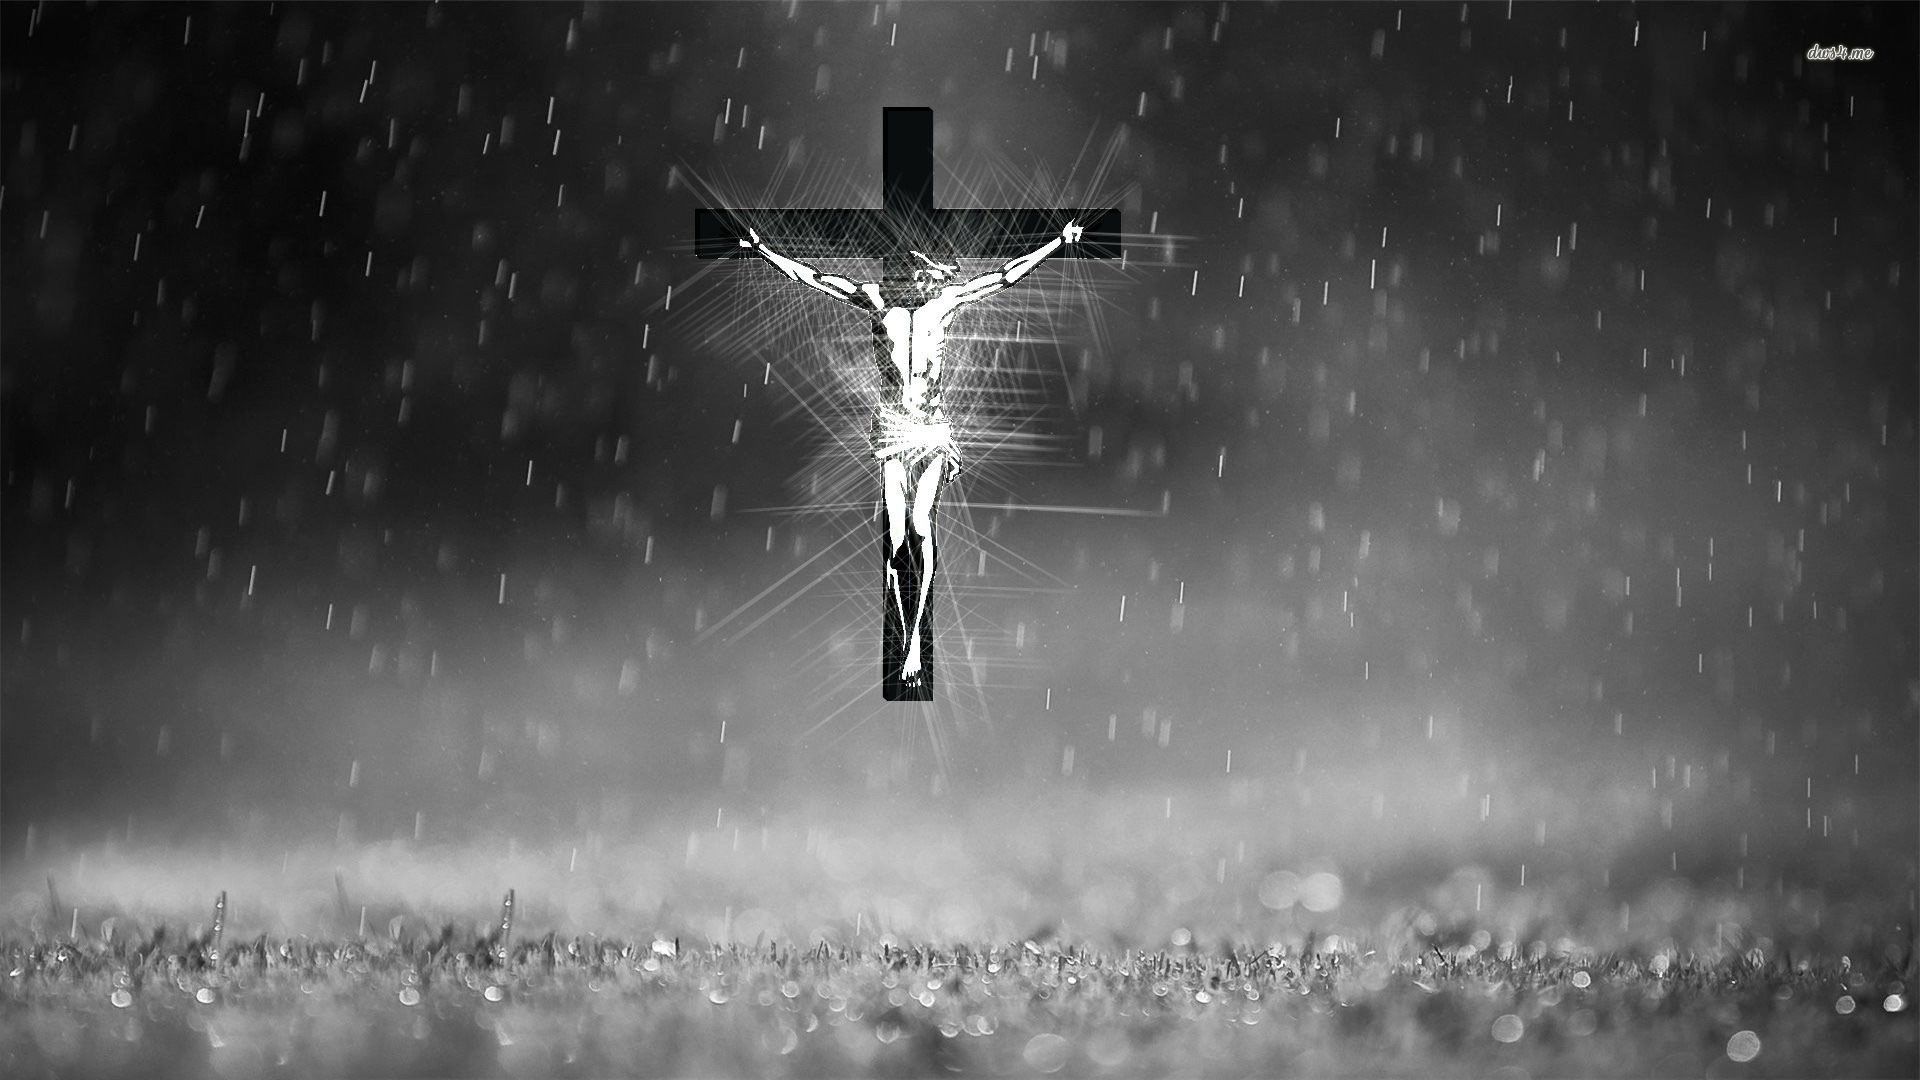 Jesus on the cross wallpaper - Digital Art wallpapers -